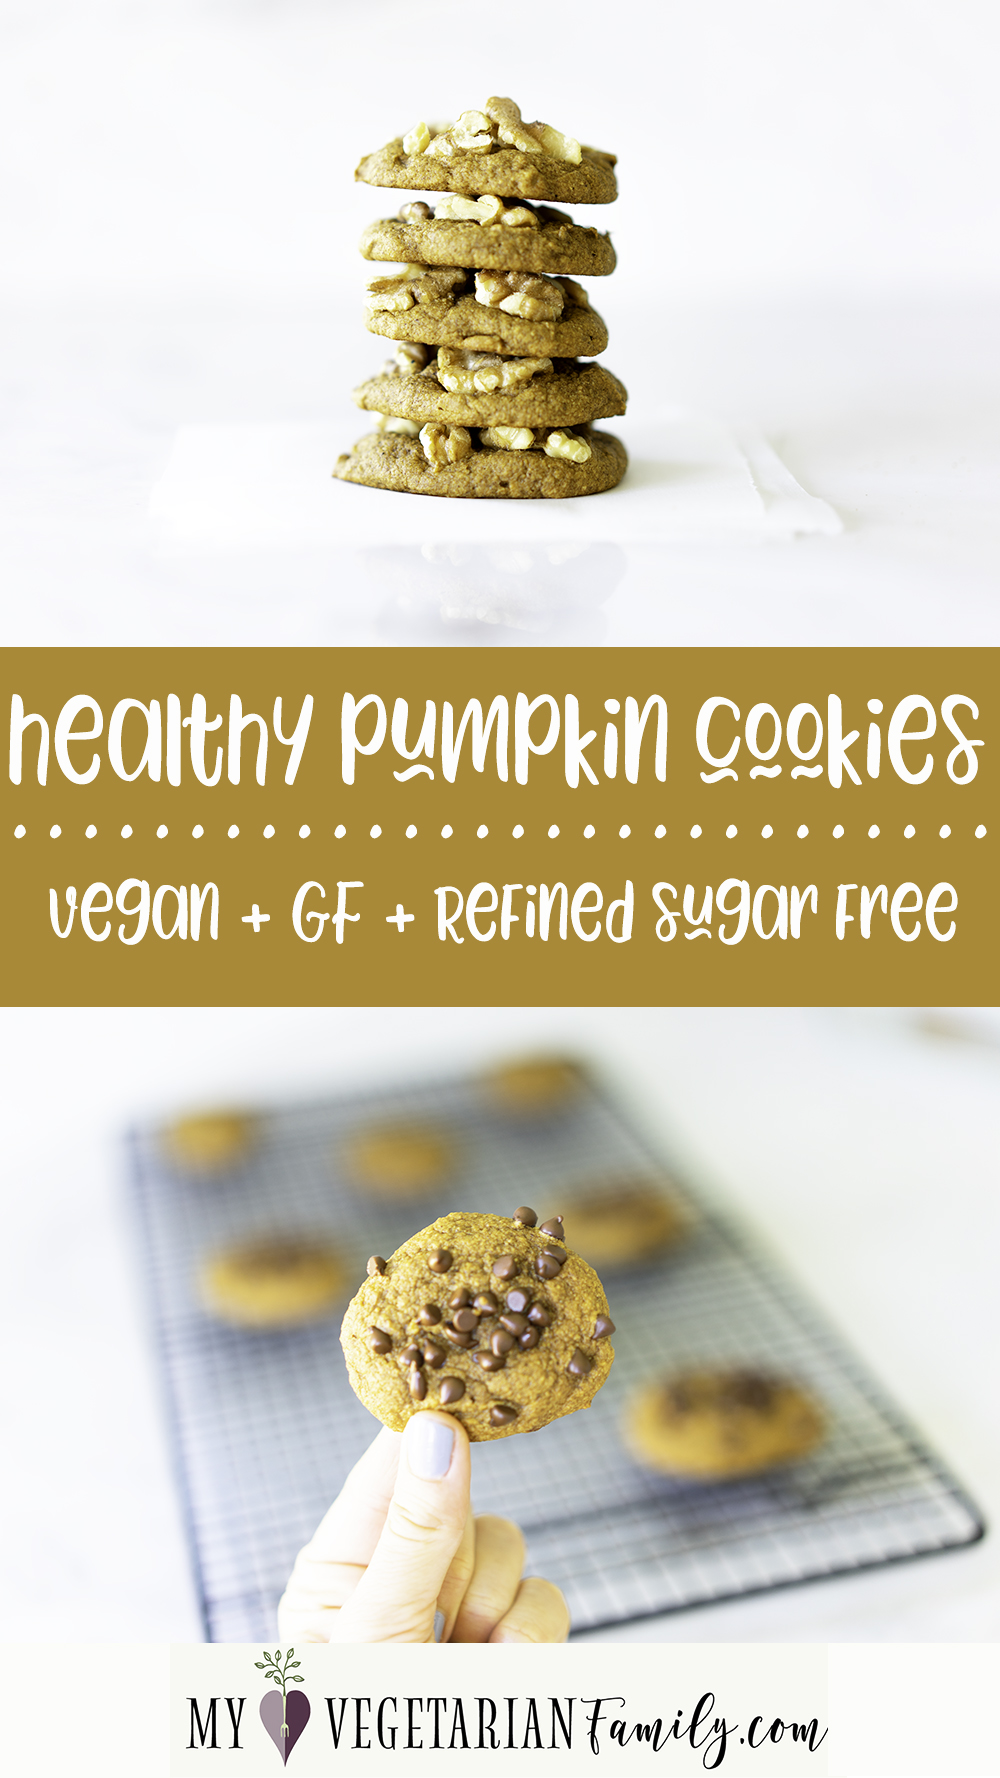 Healthy Pumpkin Cookies | Vegan Gluten Free No Eggs Refined Sugar Free | My Vegetarian Family #healthypumpkincookies